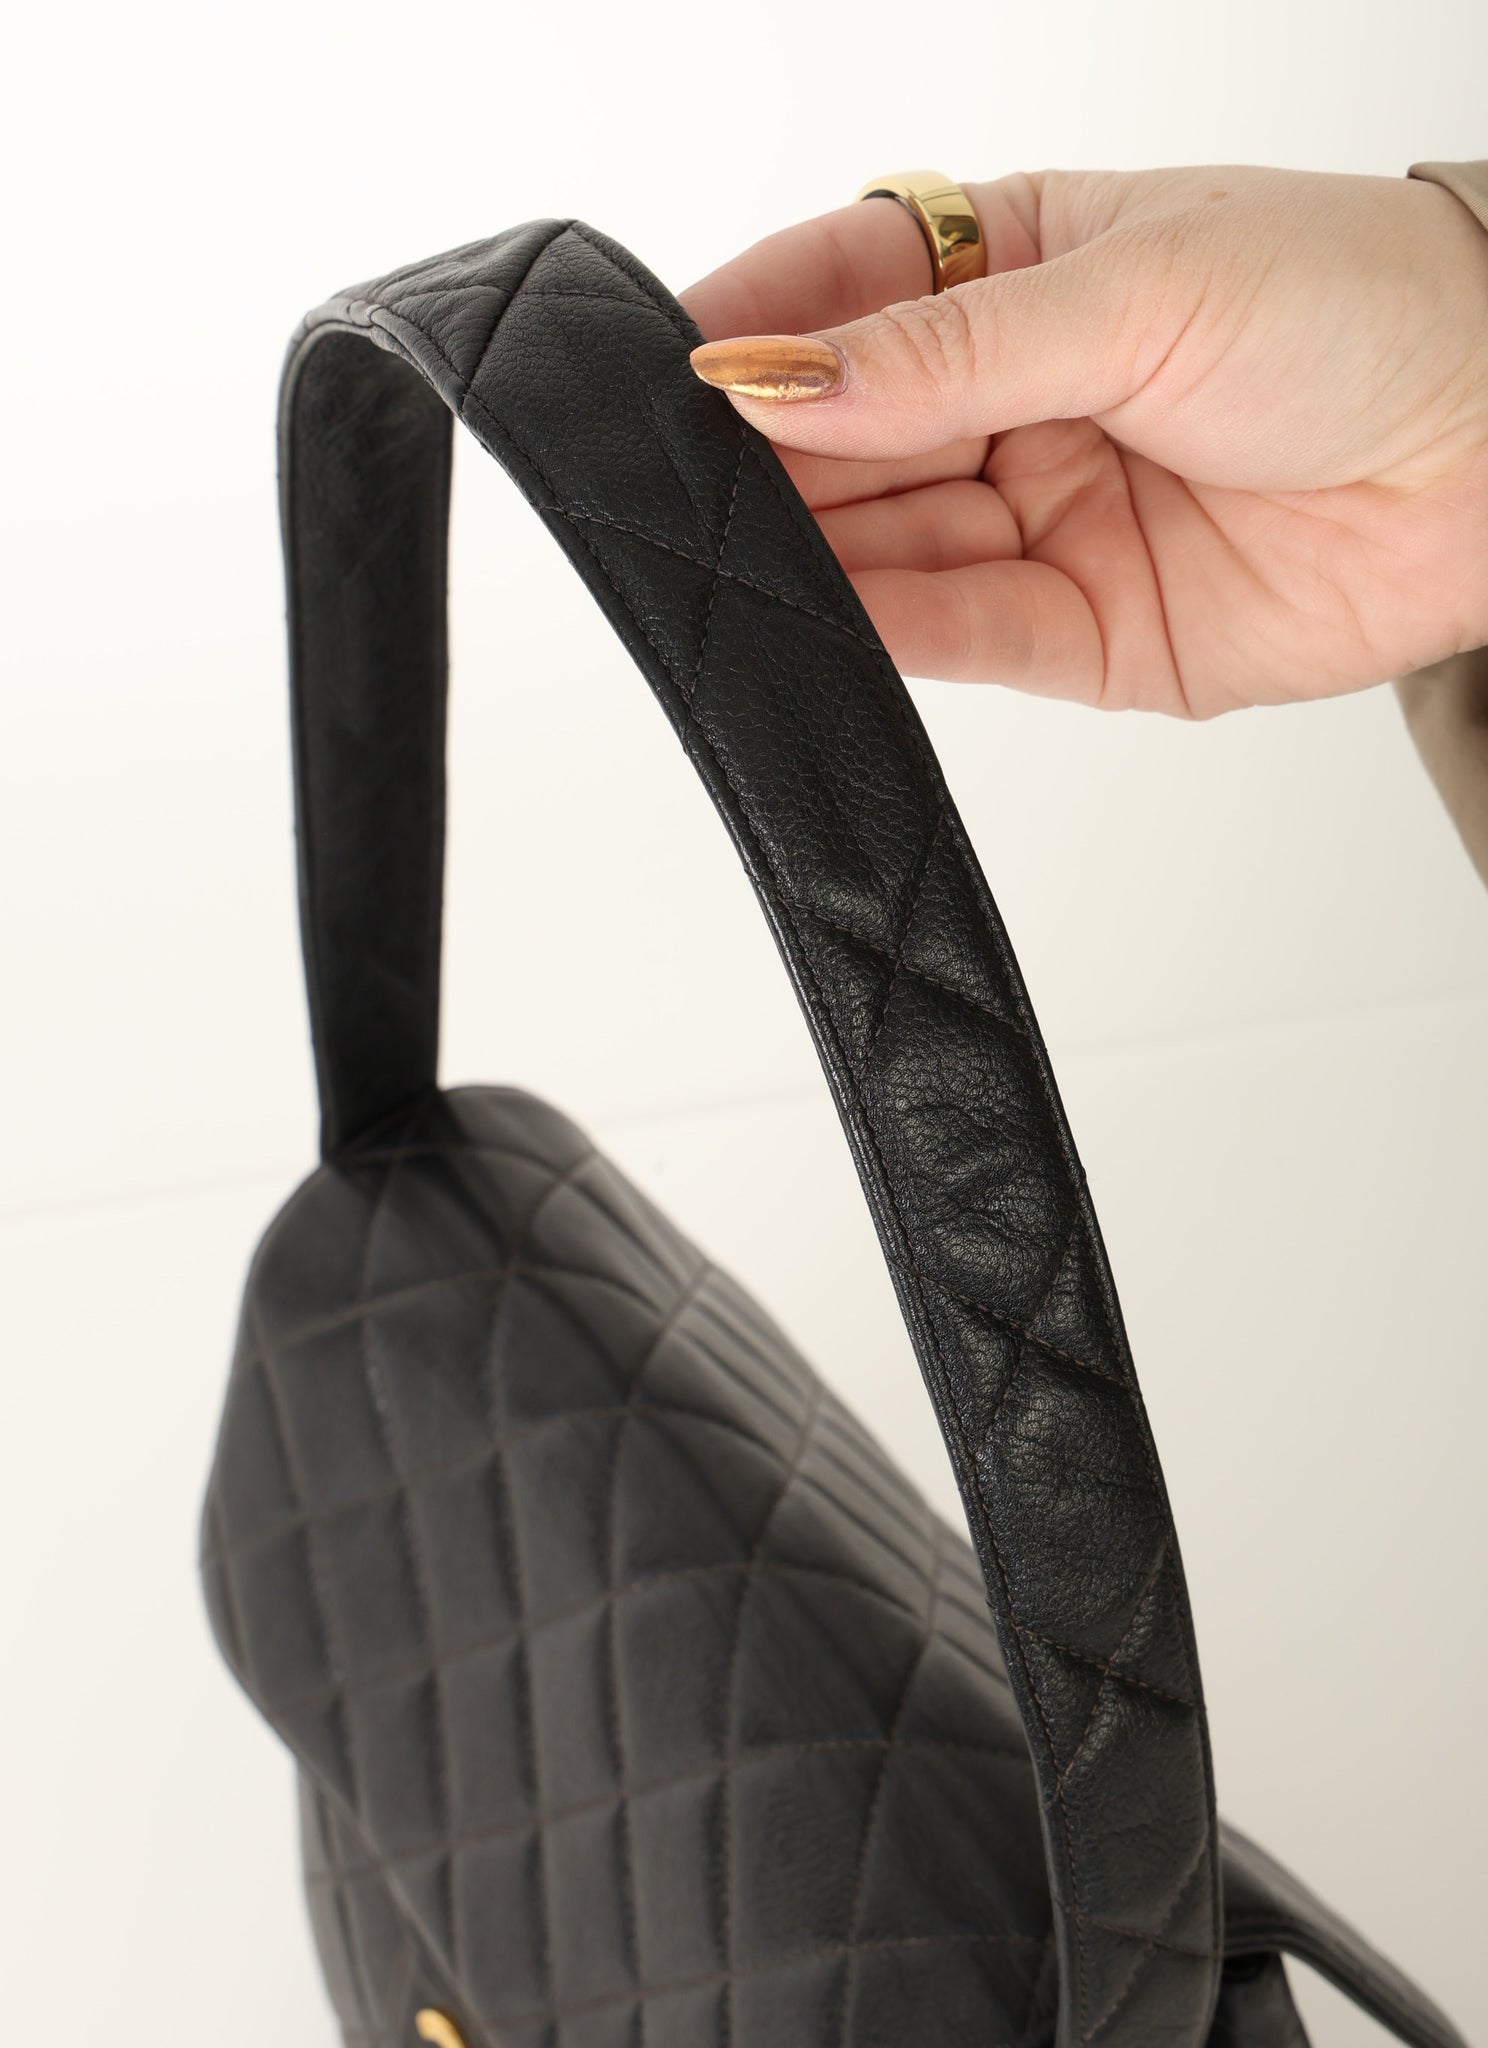 Chanel Caviar Double Turnlock Shoulder Bag